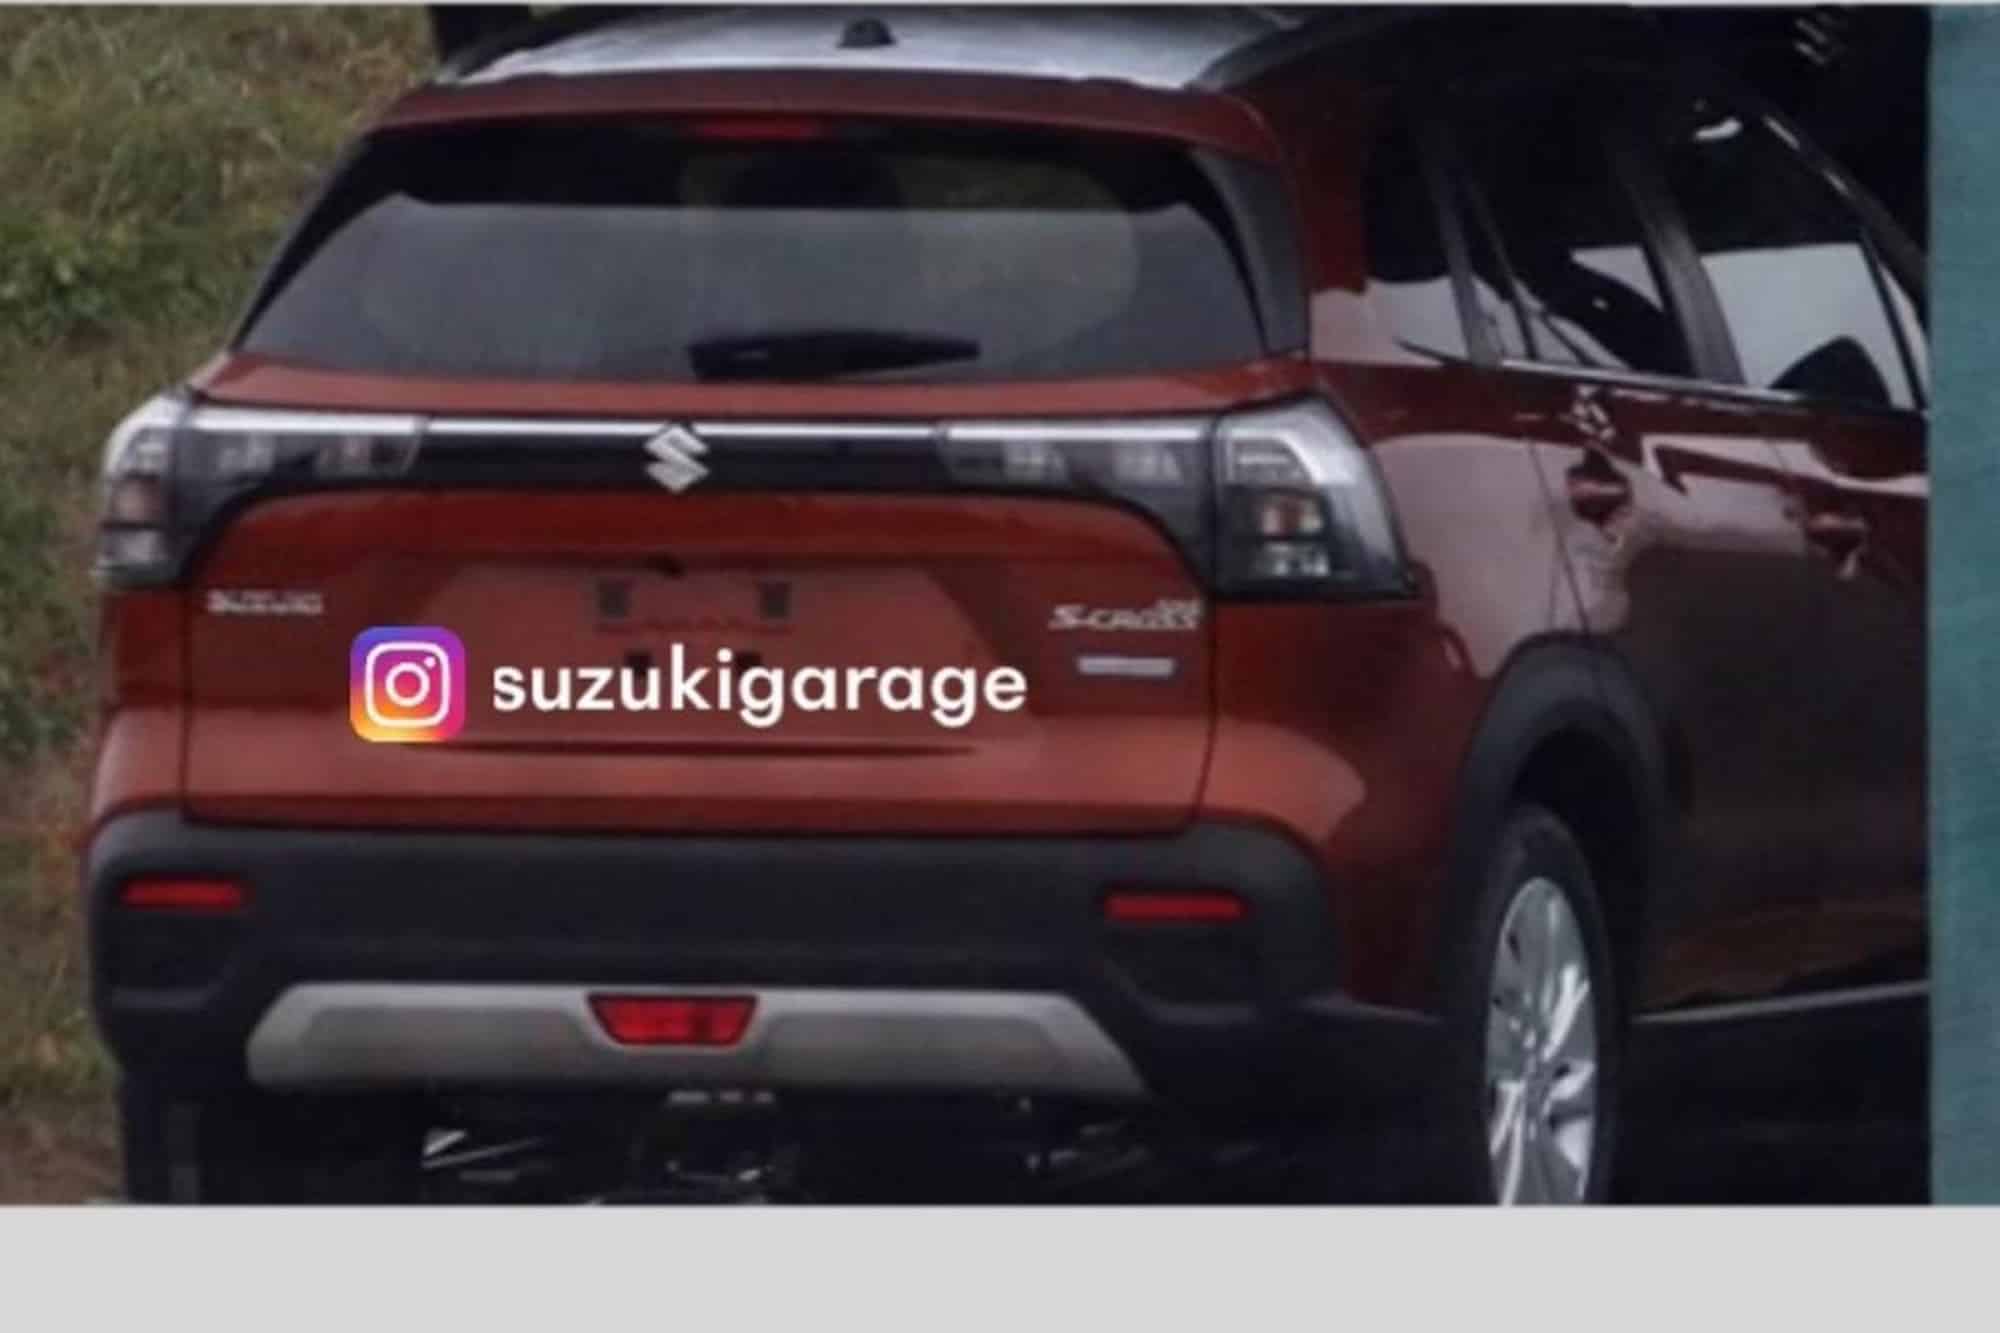 2022 Suzuki S Cross rear Leaked